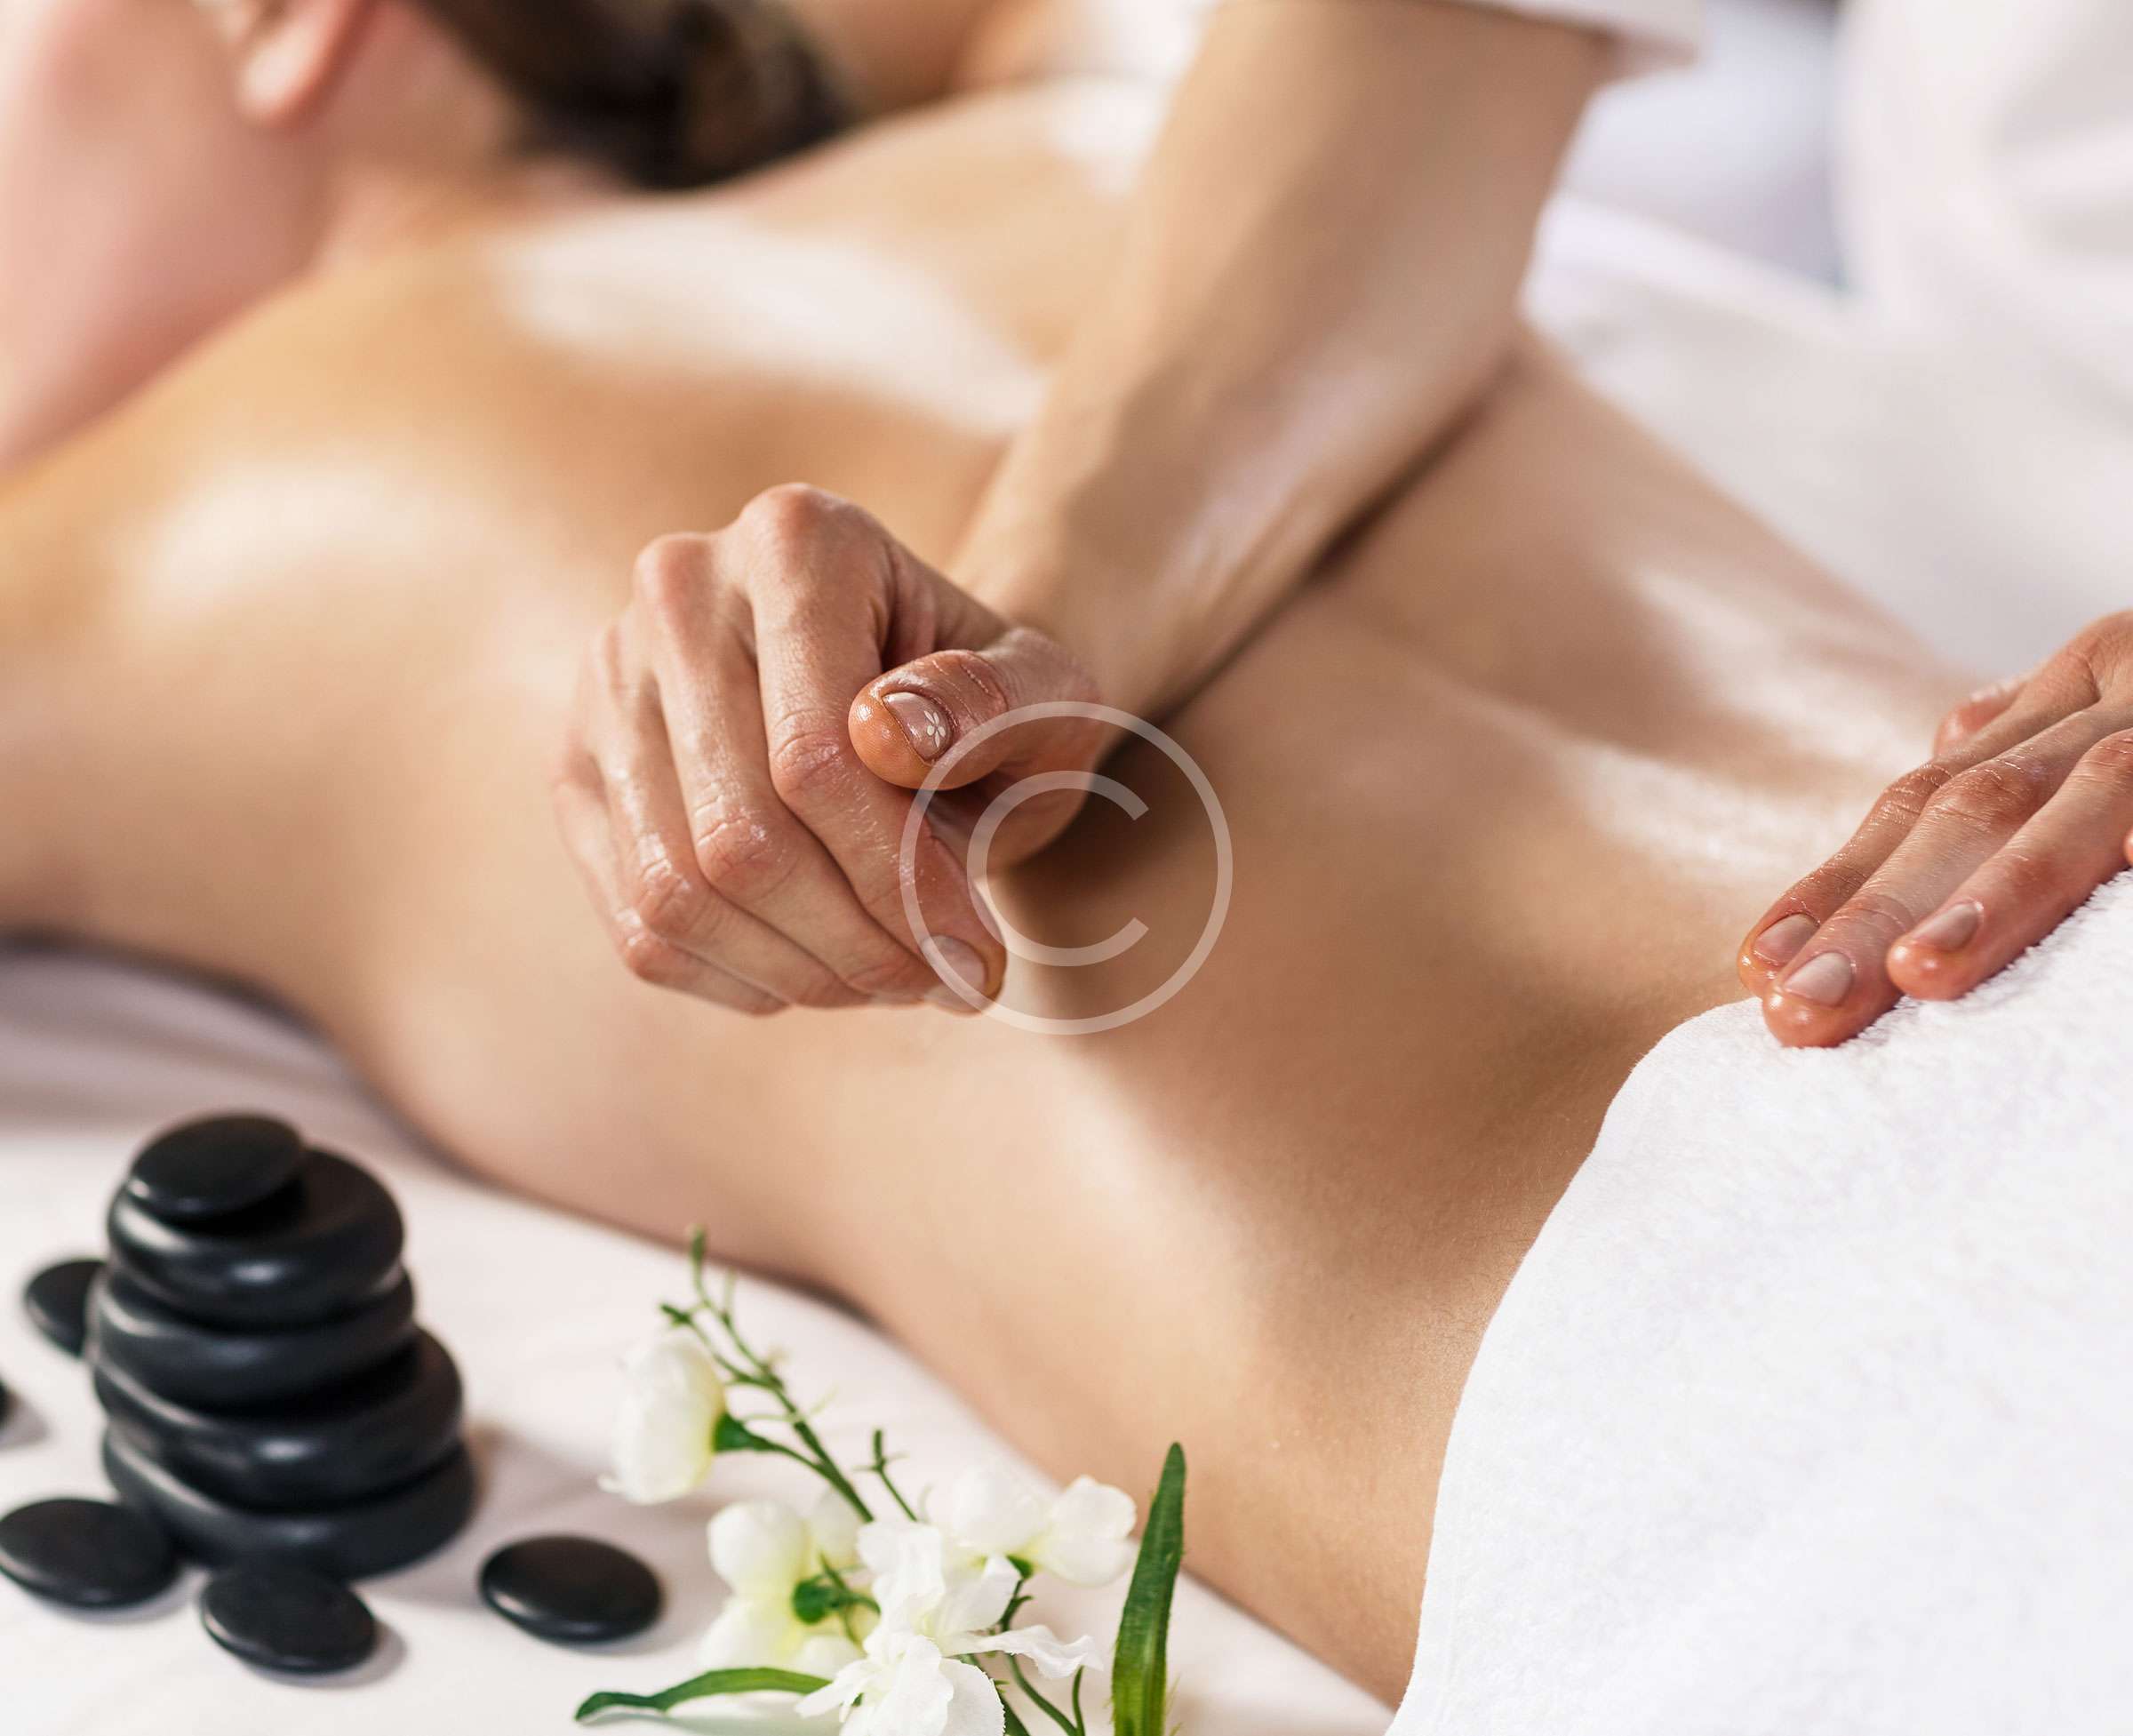 Therapeutic massage - Medical Spa La Piel by Dr. Manuel Peña.